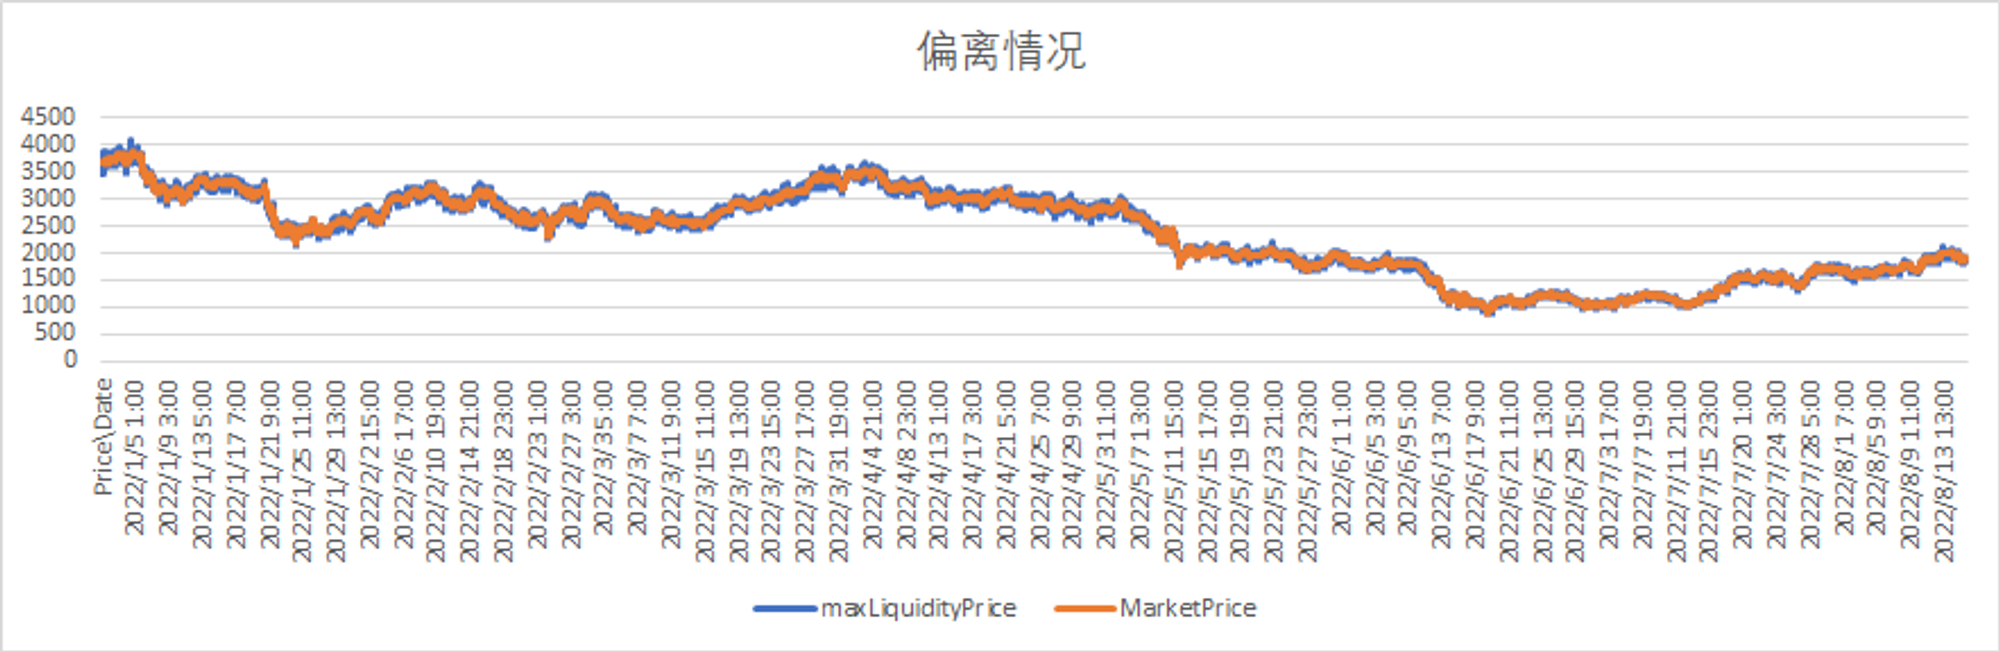 Curve 3crypto Pool 市场价格与最高流动性价格偏离情况（数据来源：Ethereum）